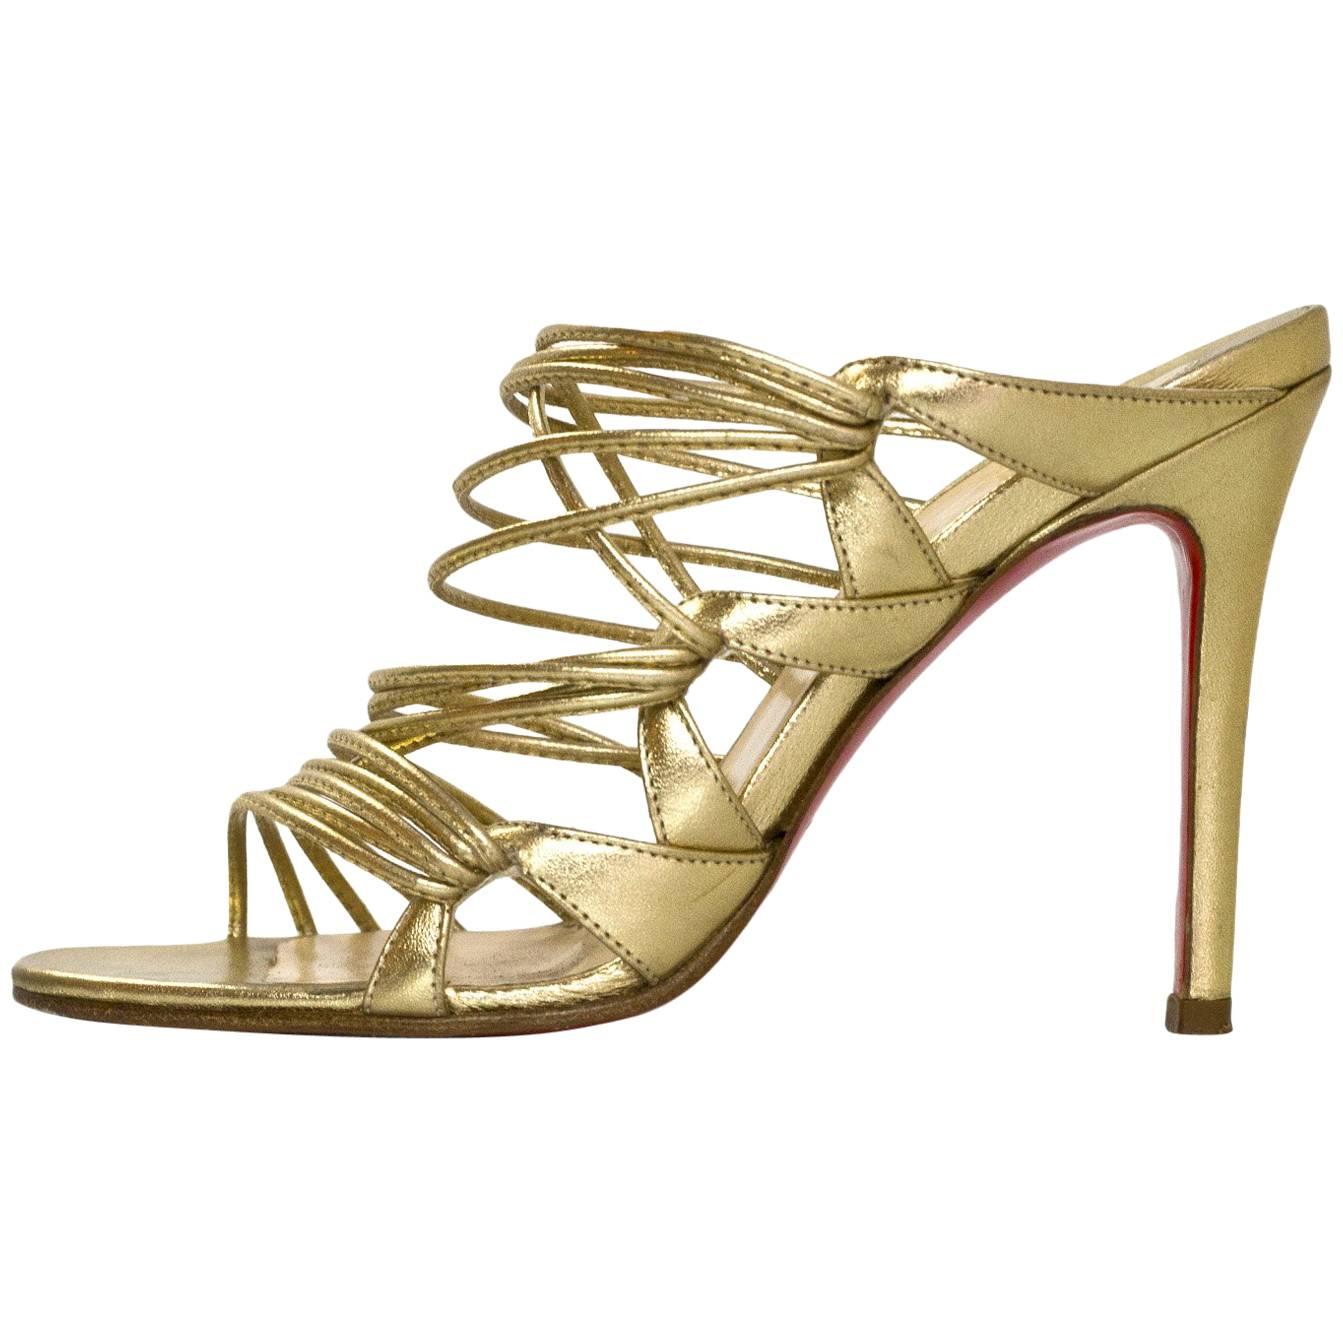 Christian Louboutin Gold Strappy Sandals Sz 35.5